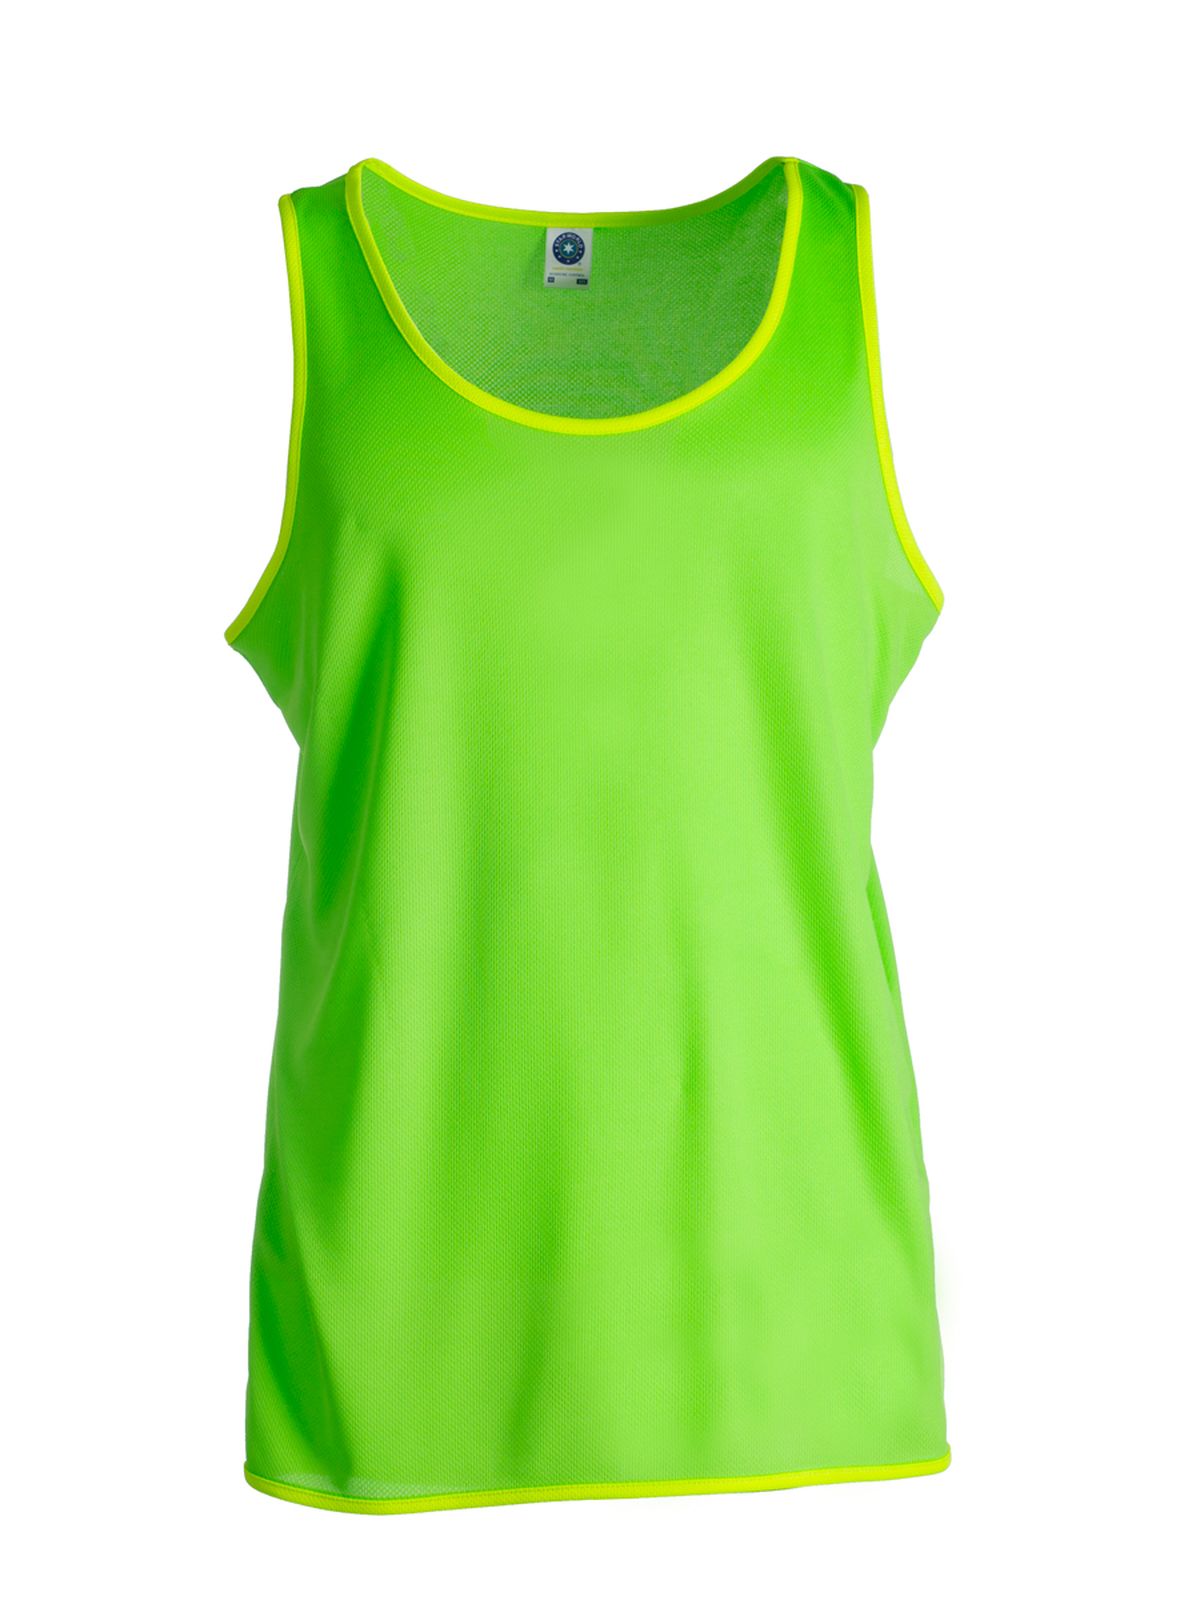 ultra-tech-contrast-running-and-sports-vest-fluorescent-green-fluo-yellow.webp